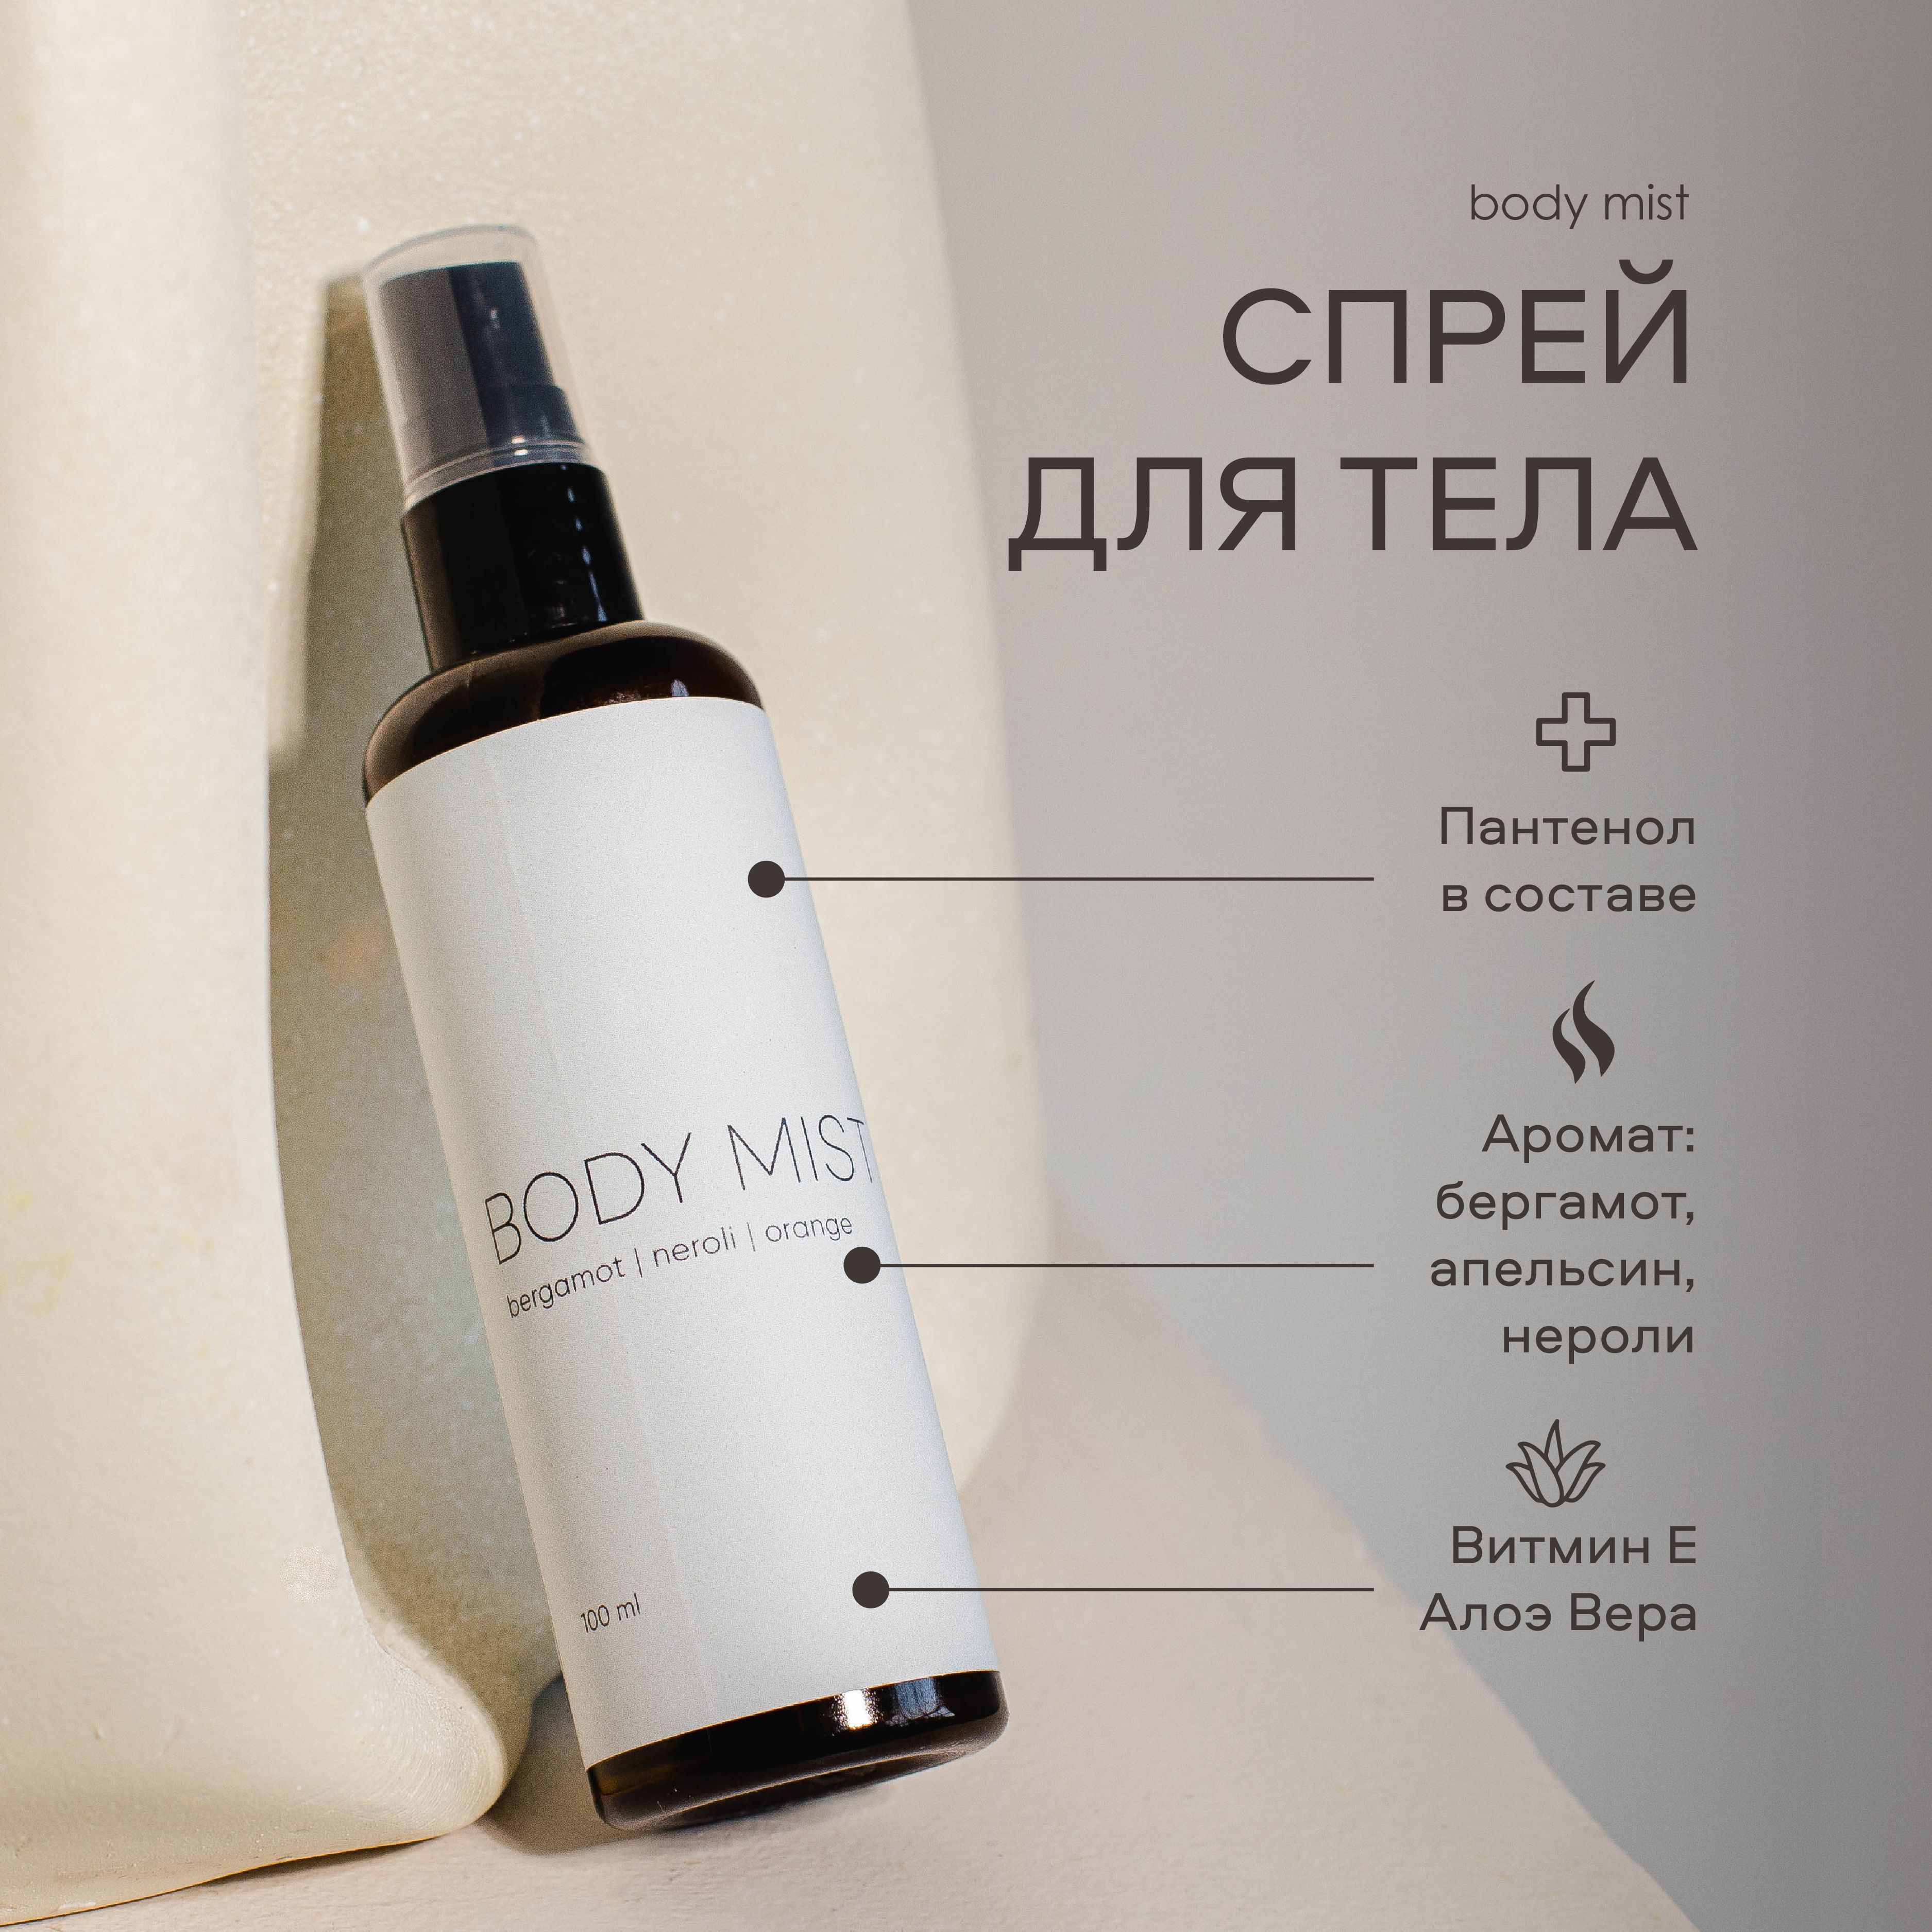 Body Mist Bershka – купить в интернет-магазине OZON по низкой цене